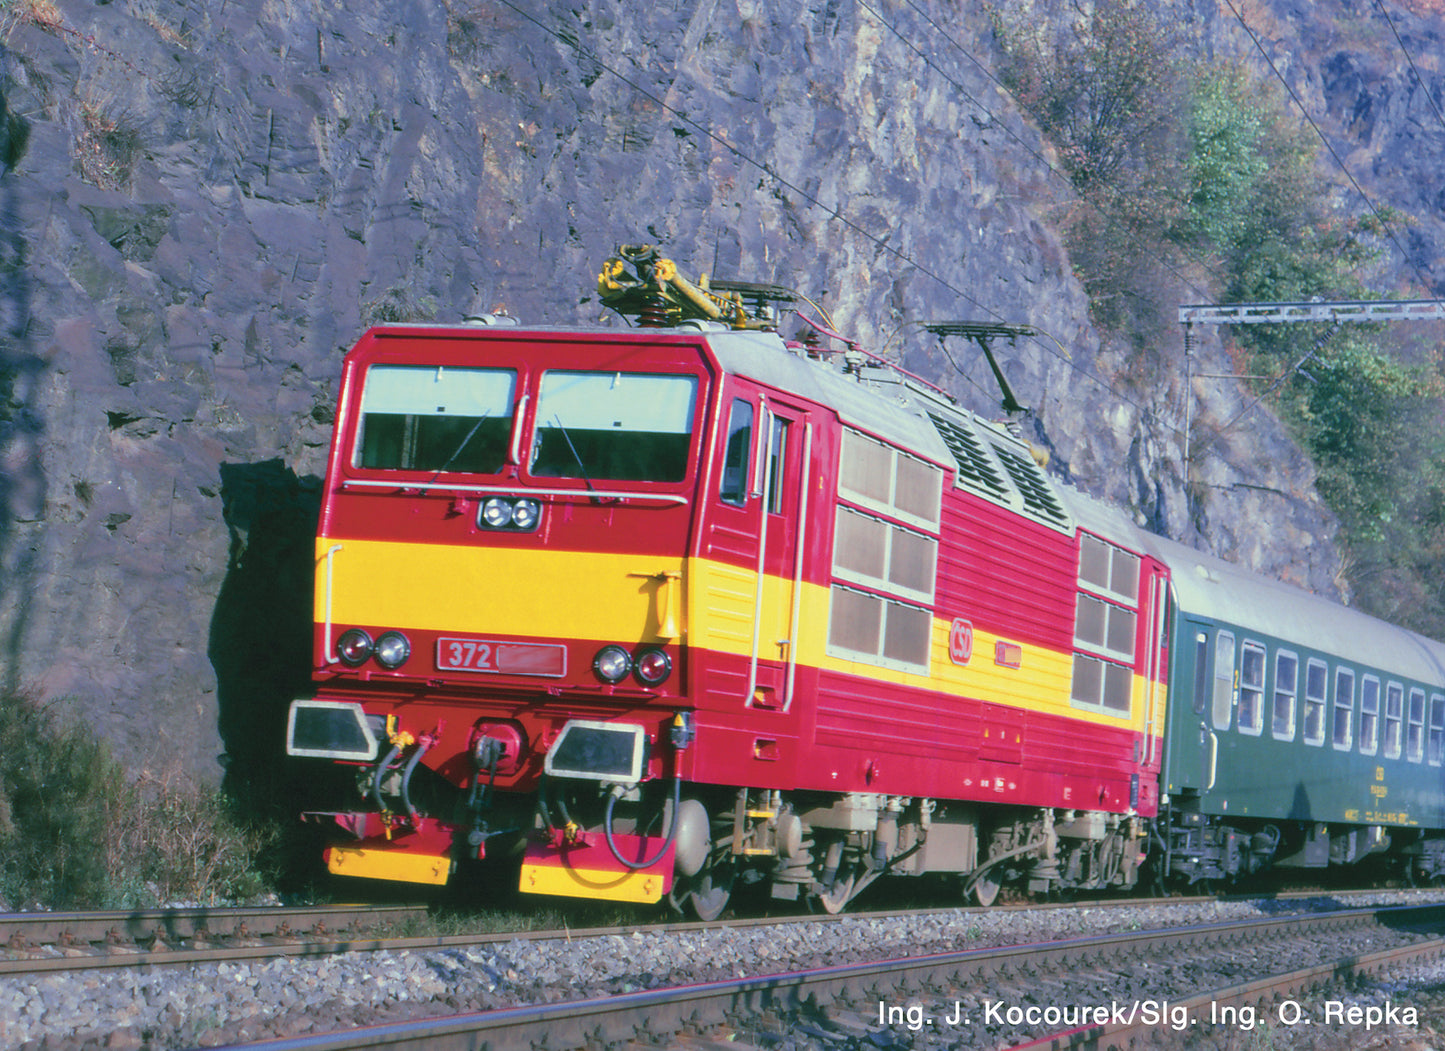 Roco 71221 Electric locomotive class 372 2021 New Item